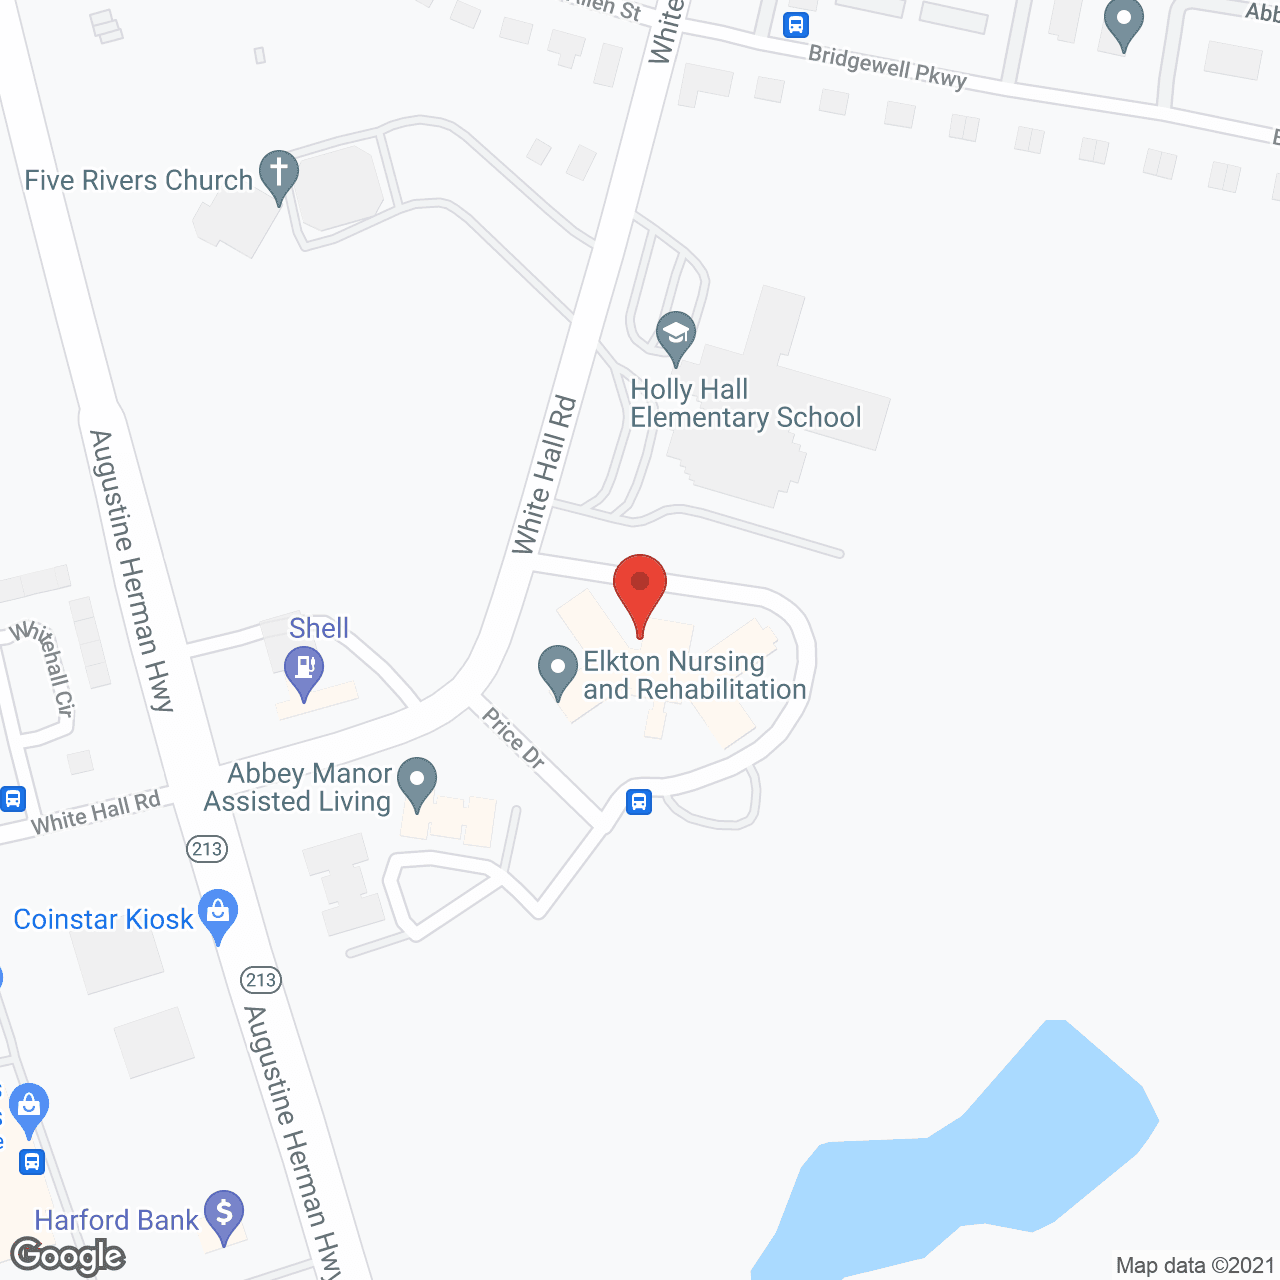 Elkton Care and Rehabilitation for Elkton in google map